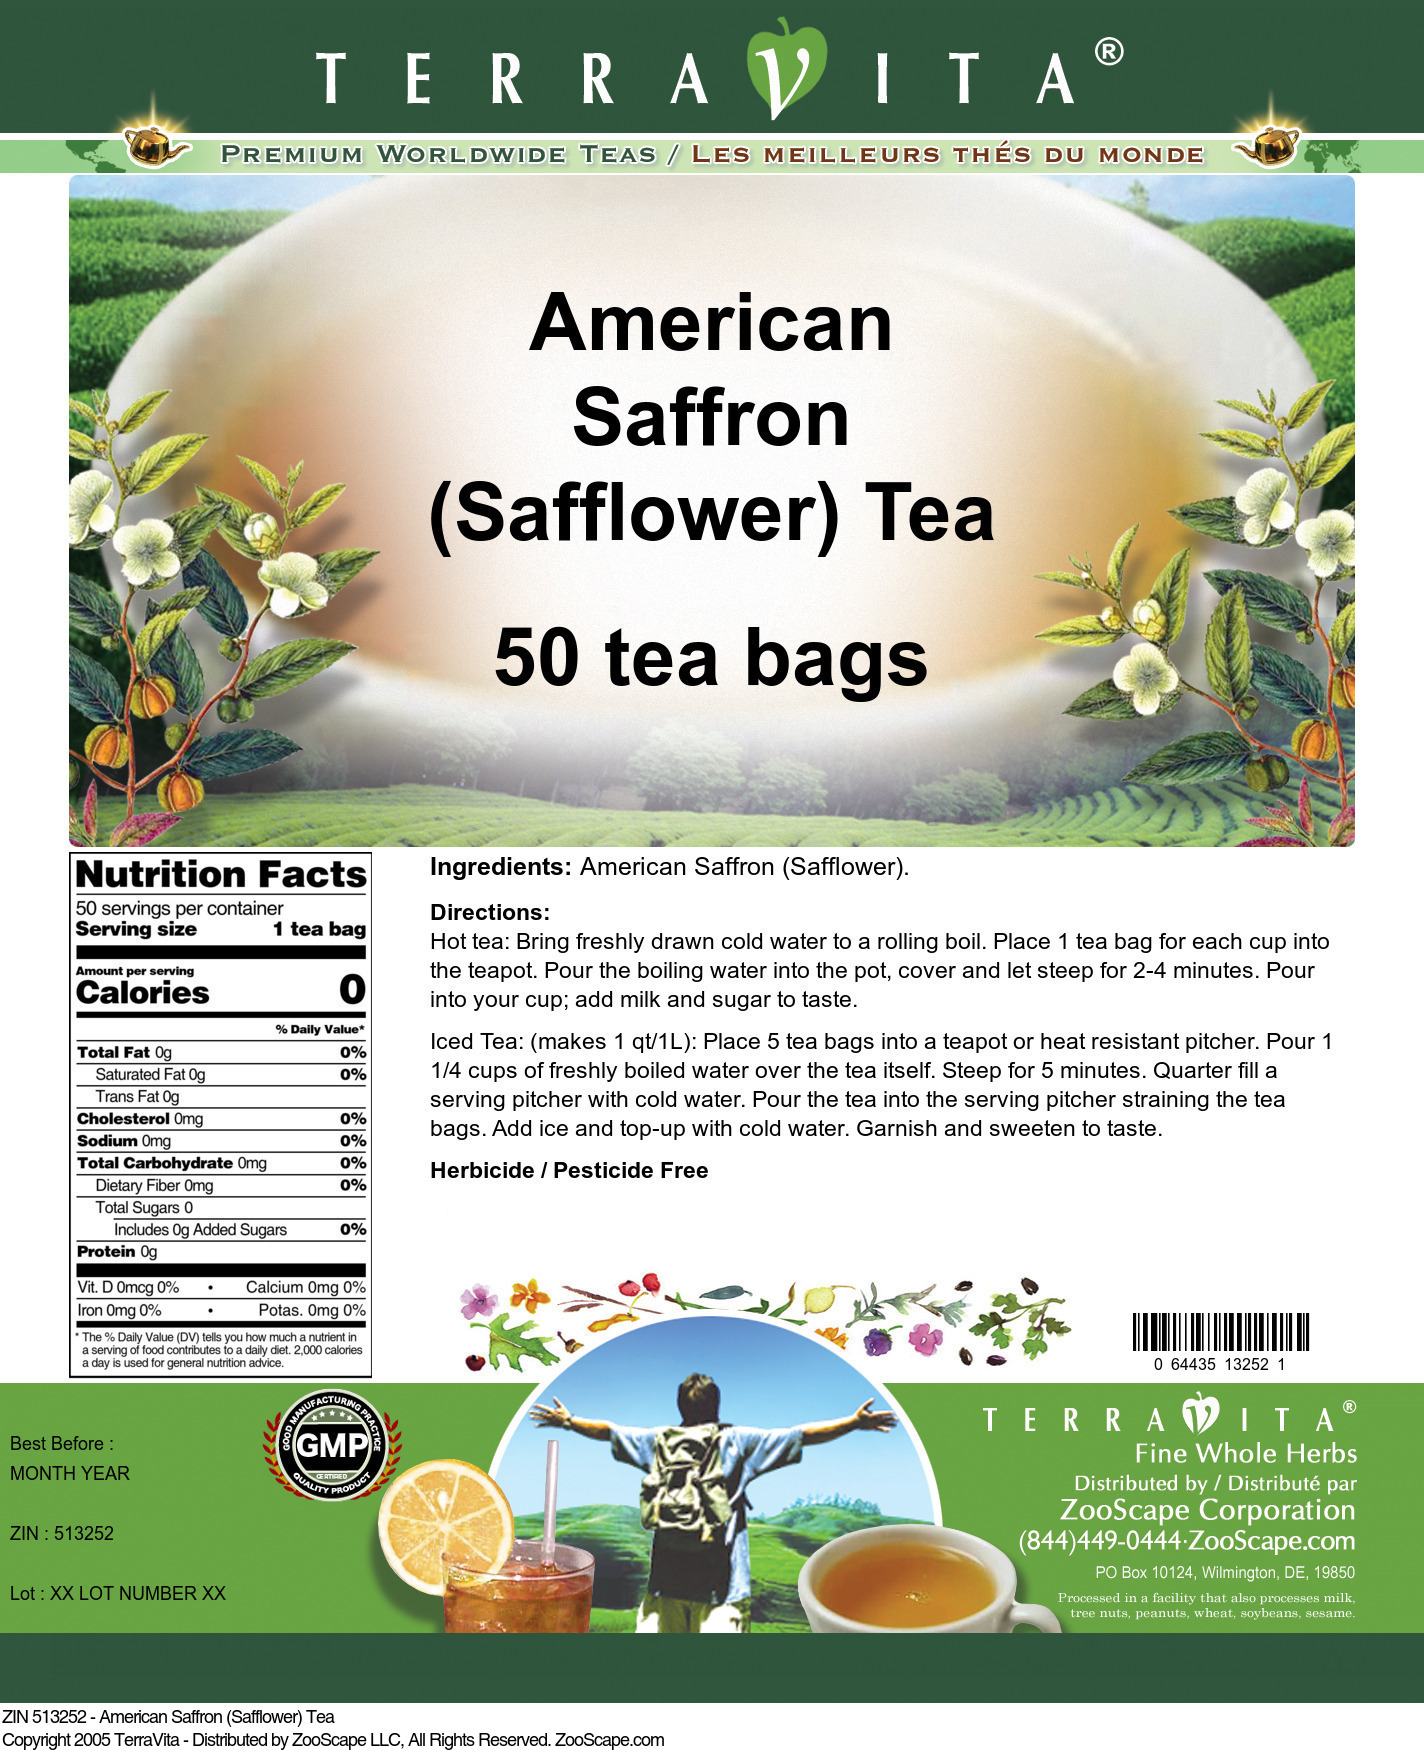 American Saffron (Safflower) Tea - Label